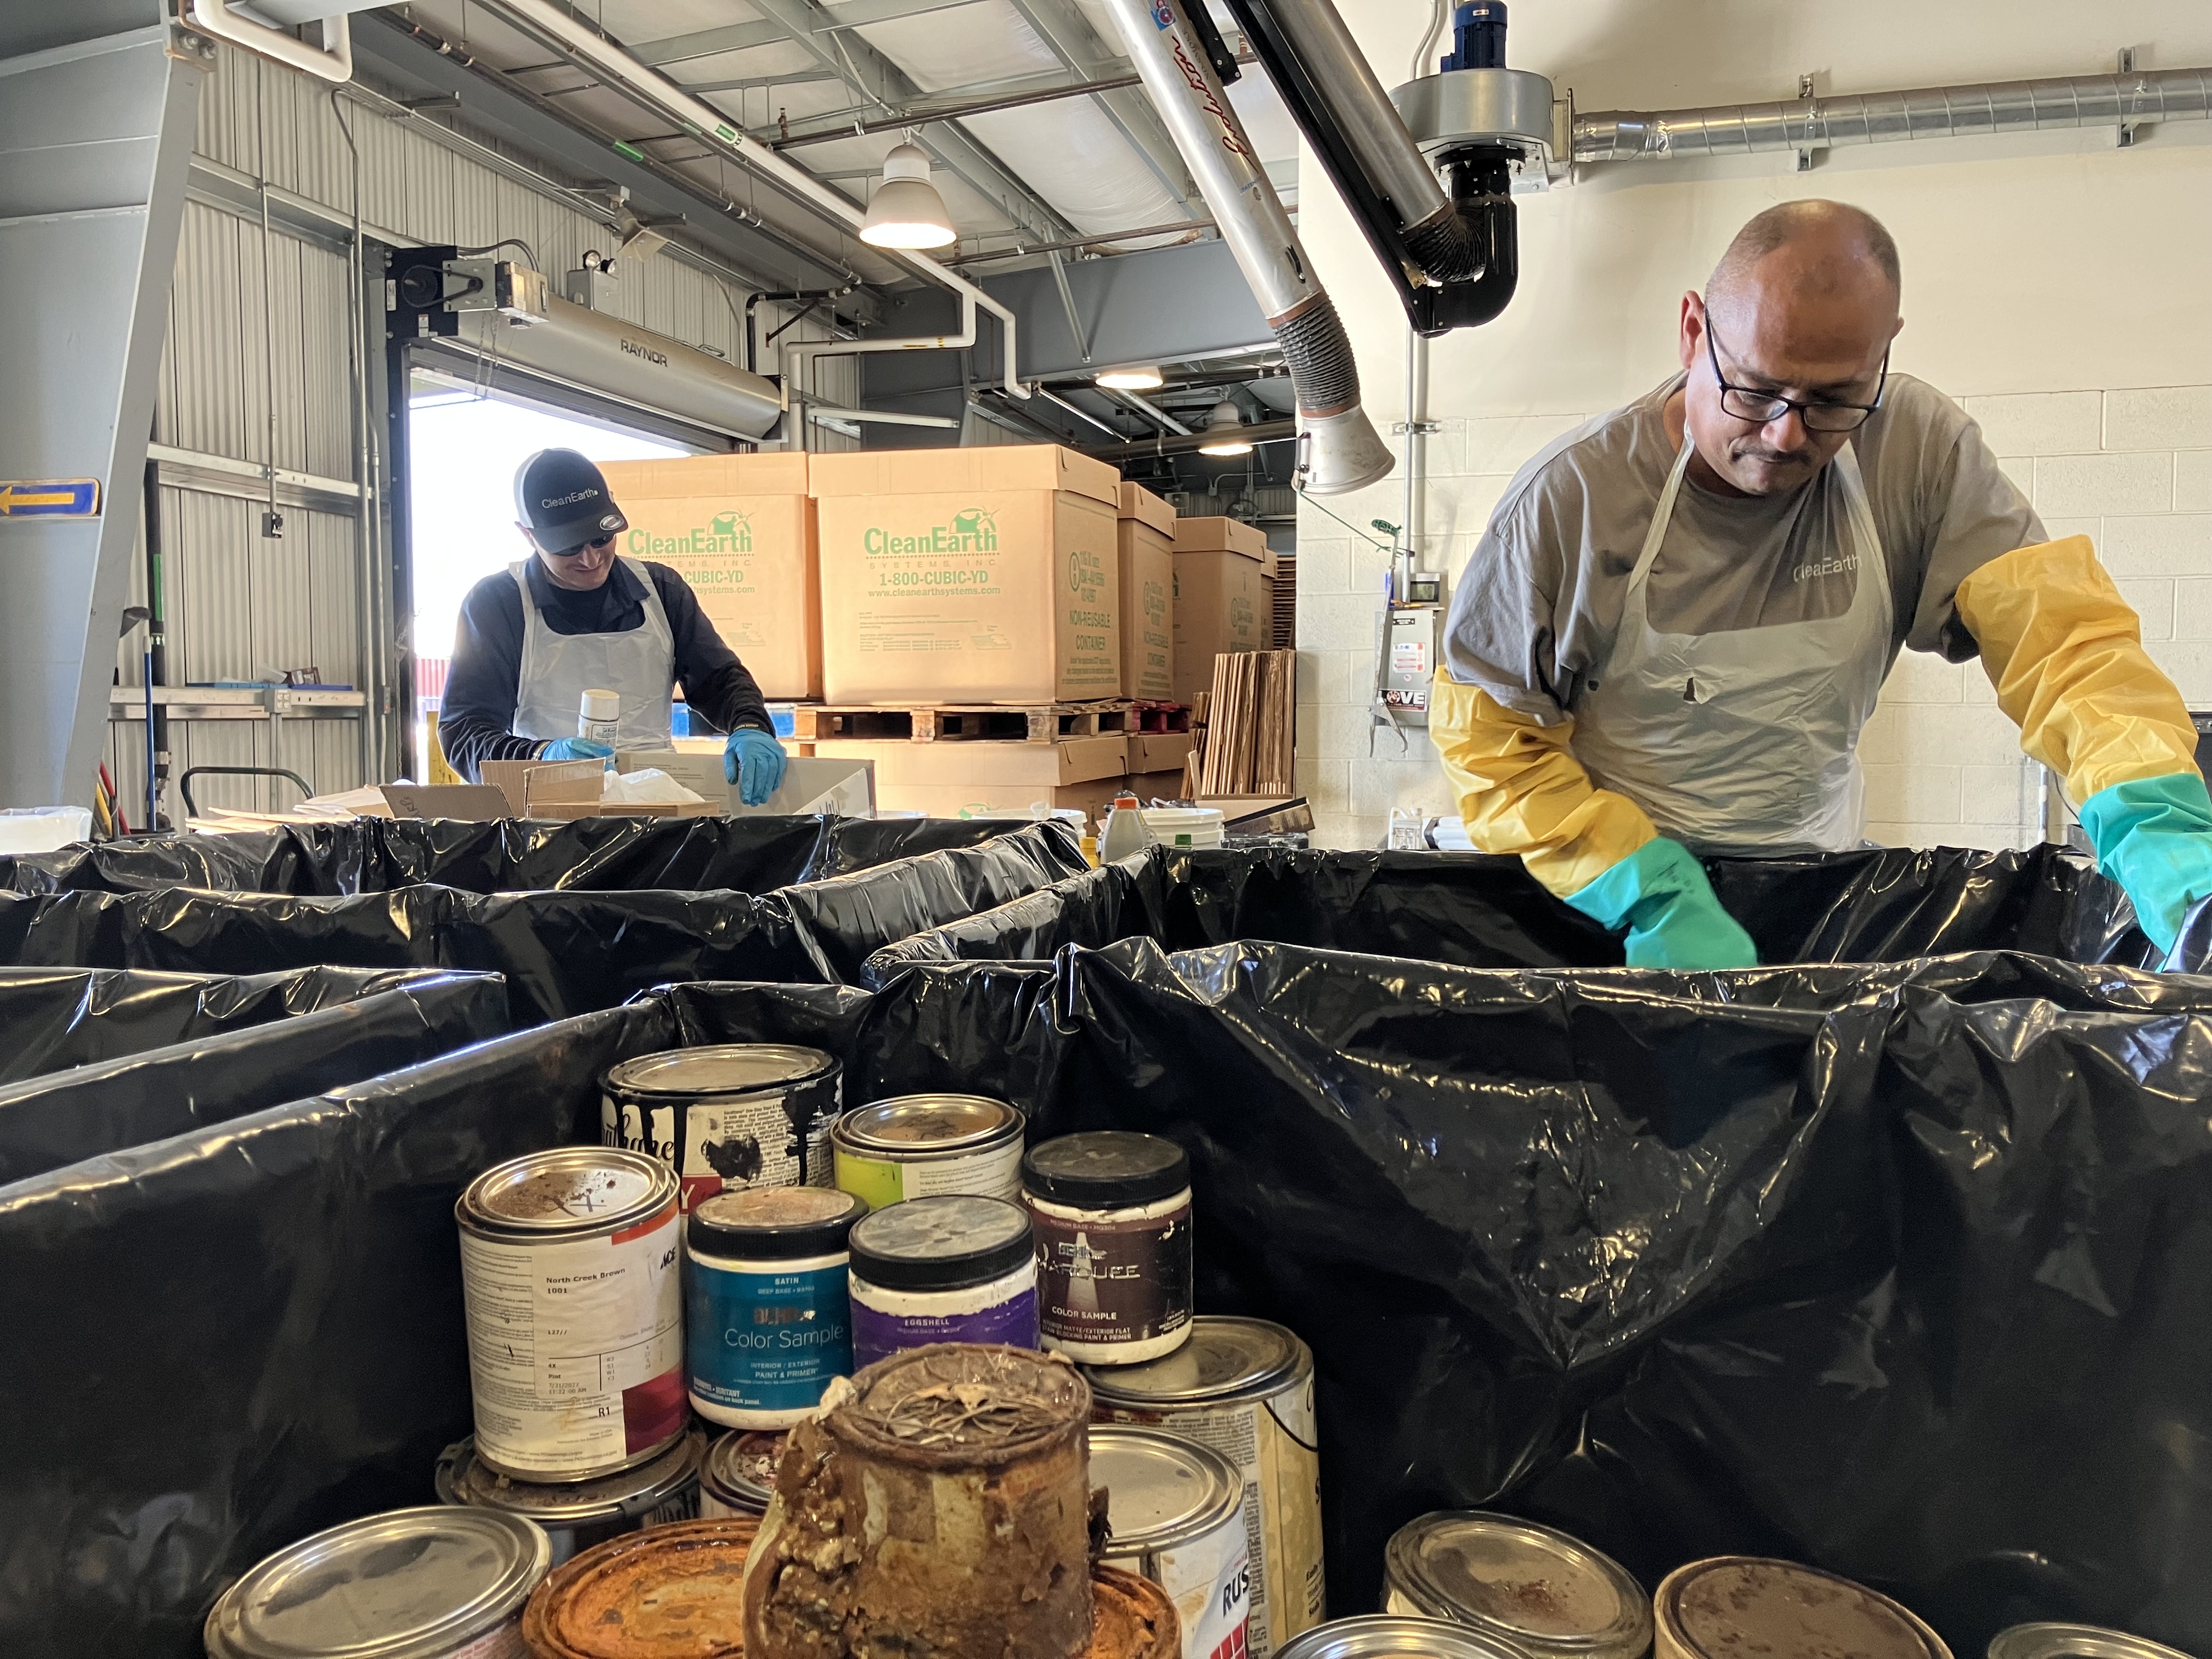 Technicians sort hazardous waste at a drop-off facility.